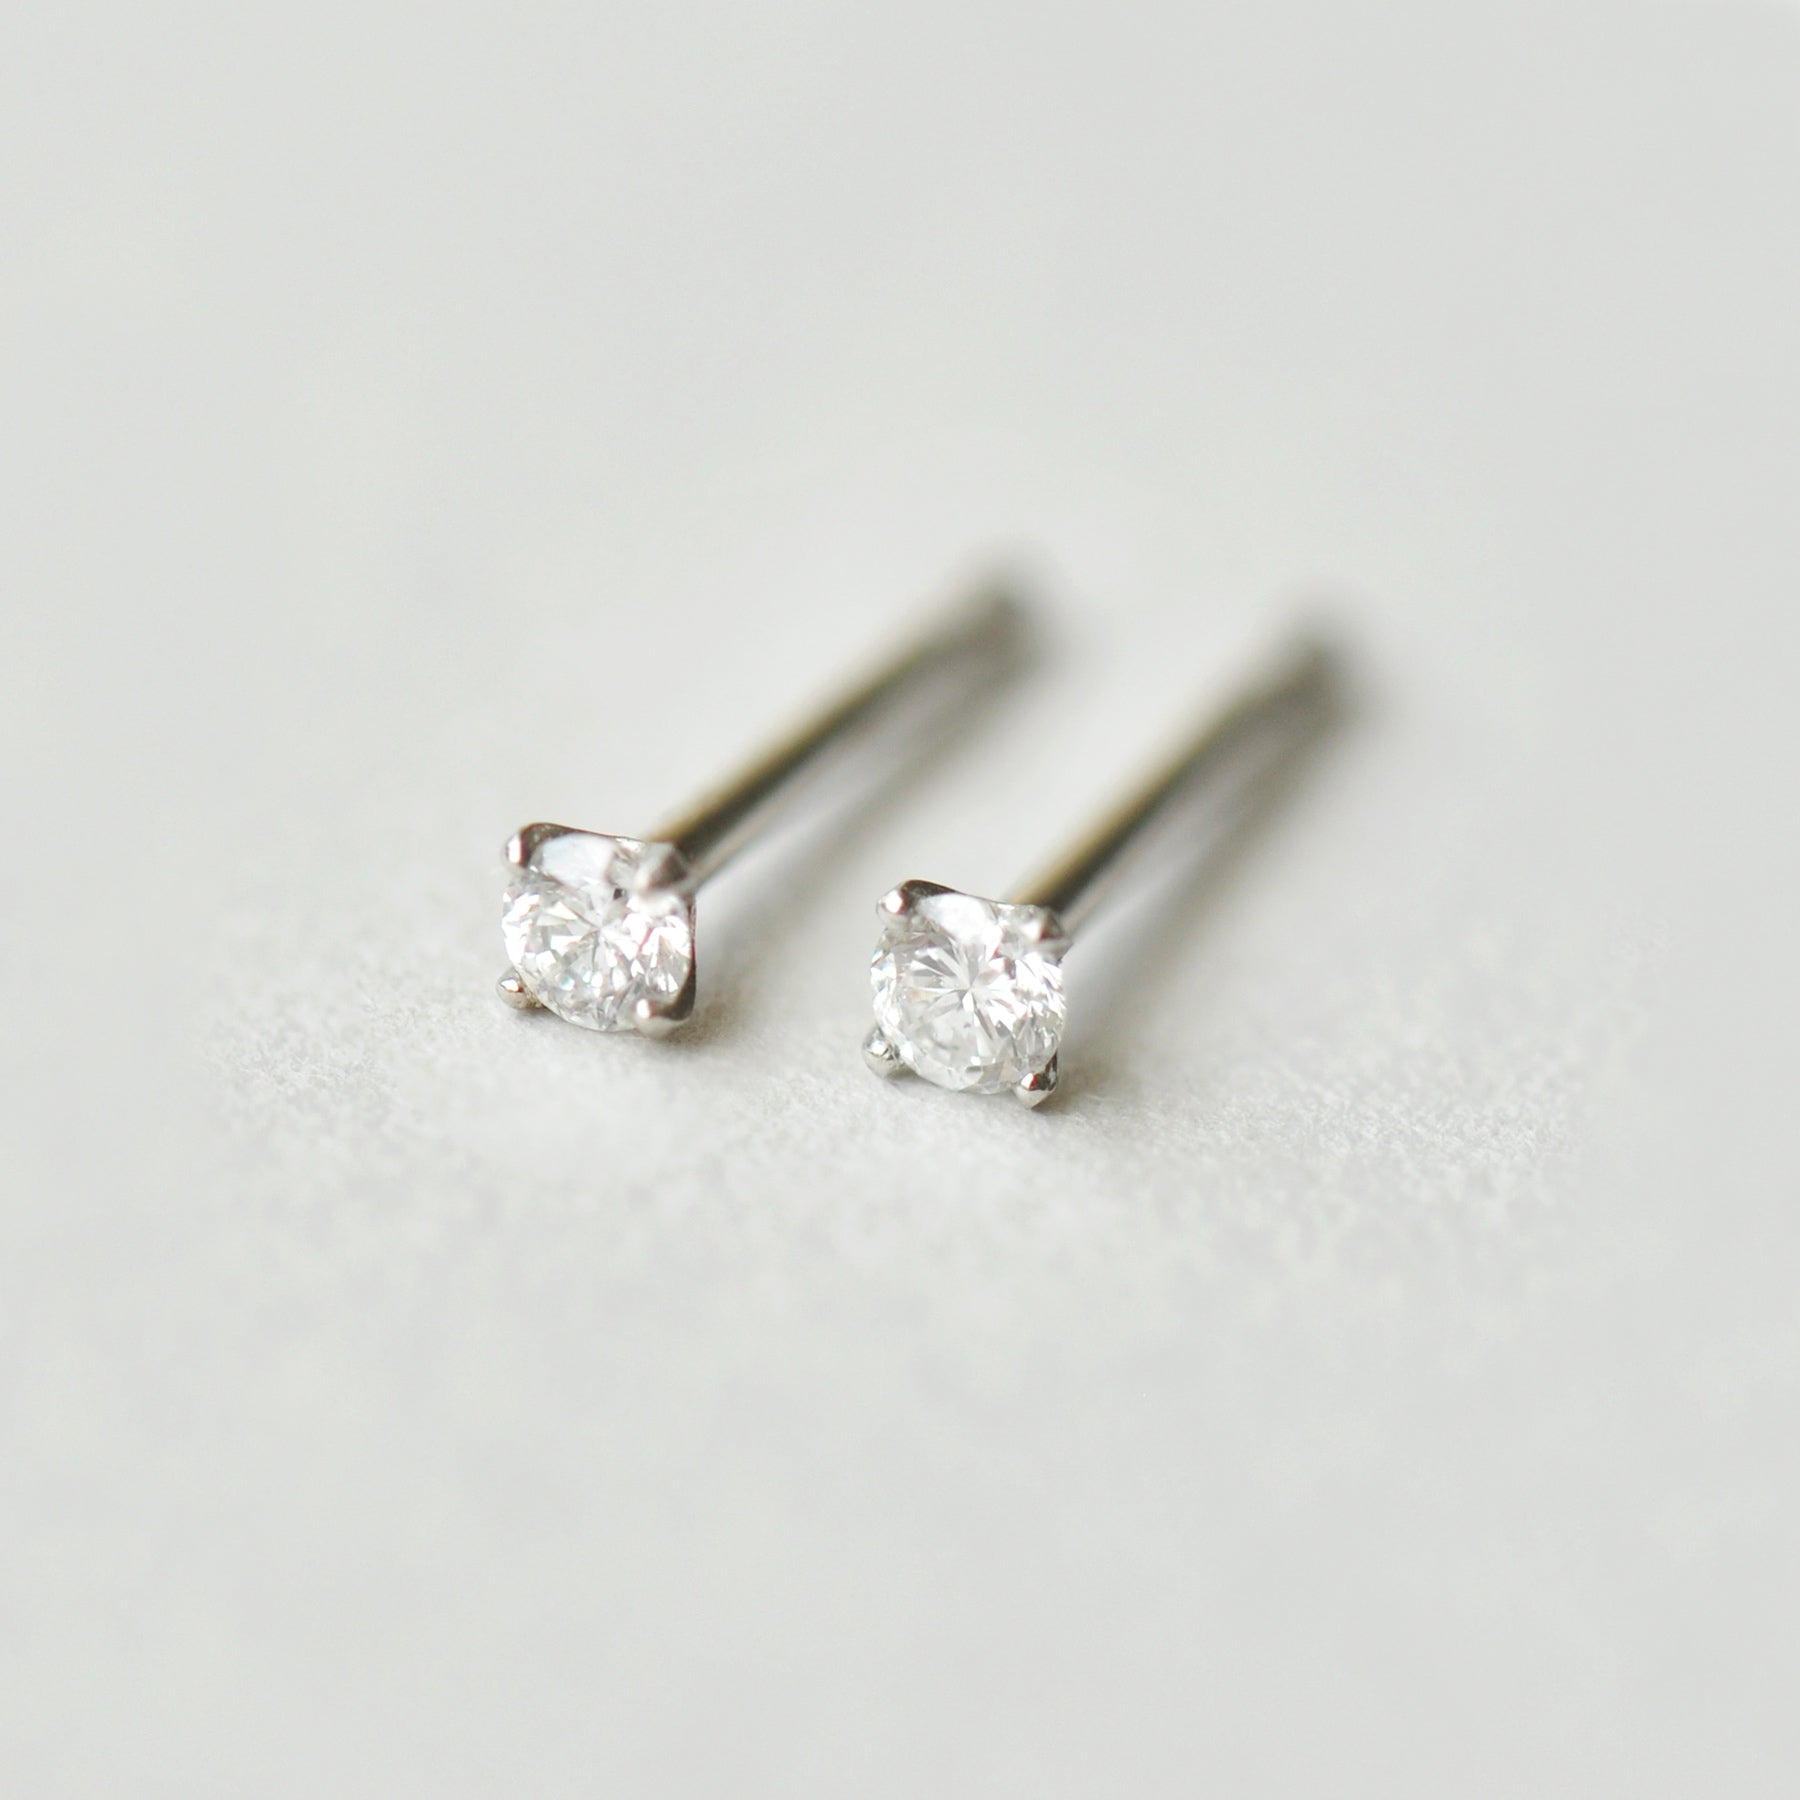 [Second Earrings] Platinum Diamond Earrings 0. 08ct - Product Image